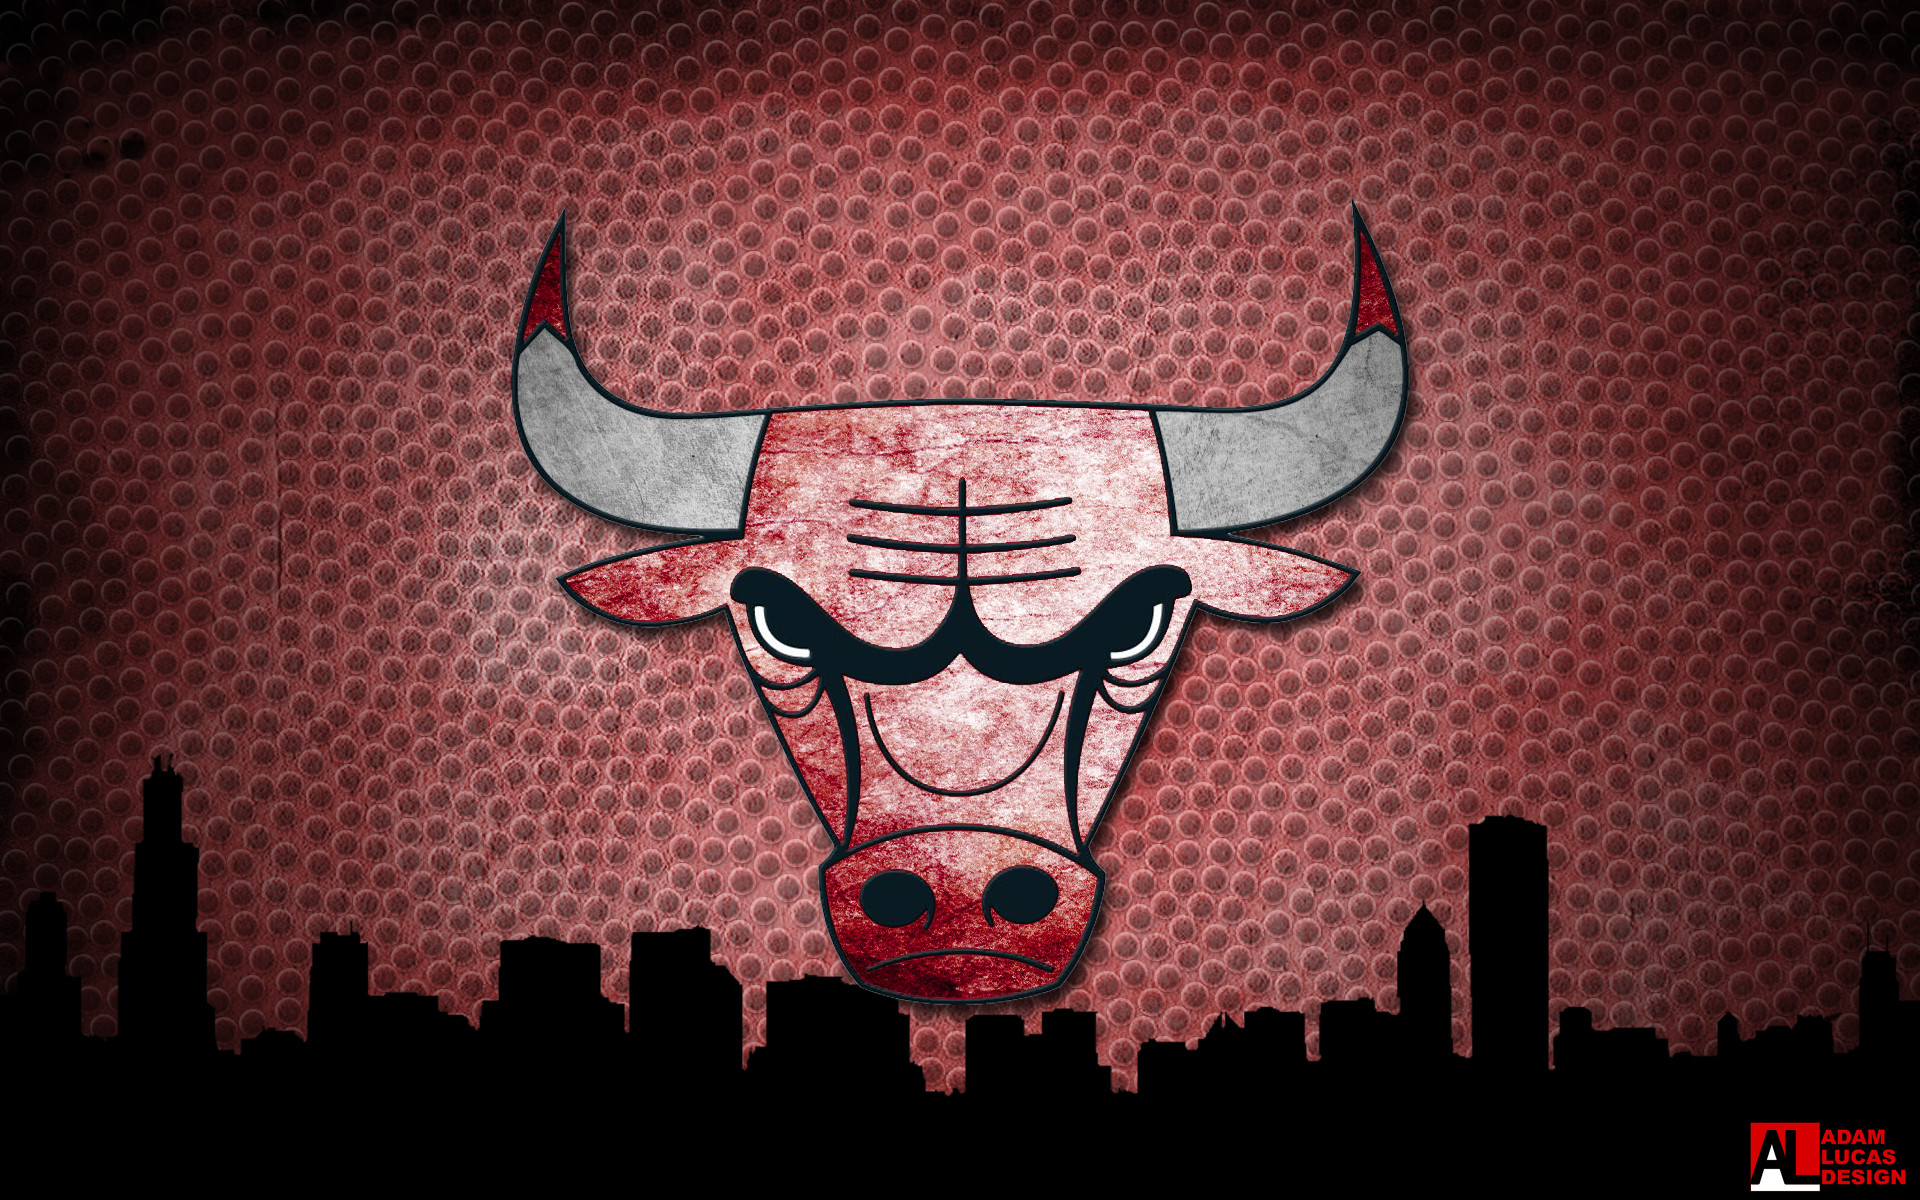 Chicago Bulls Logo Wallpaper.